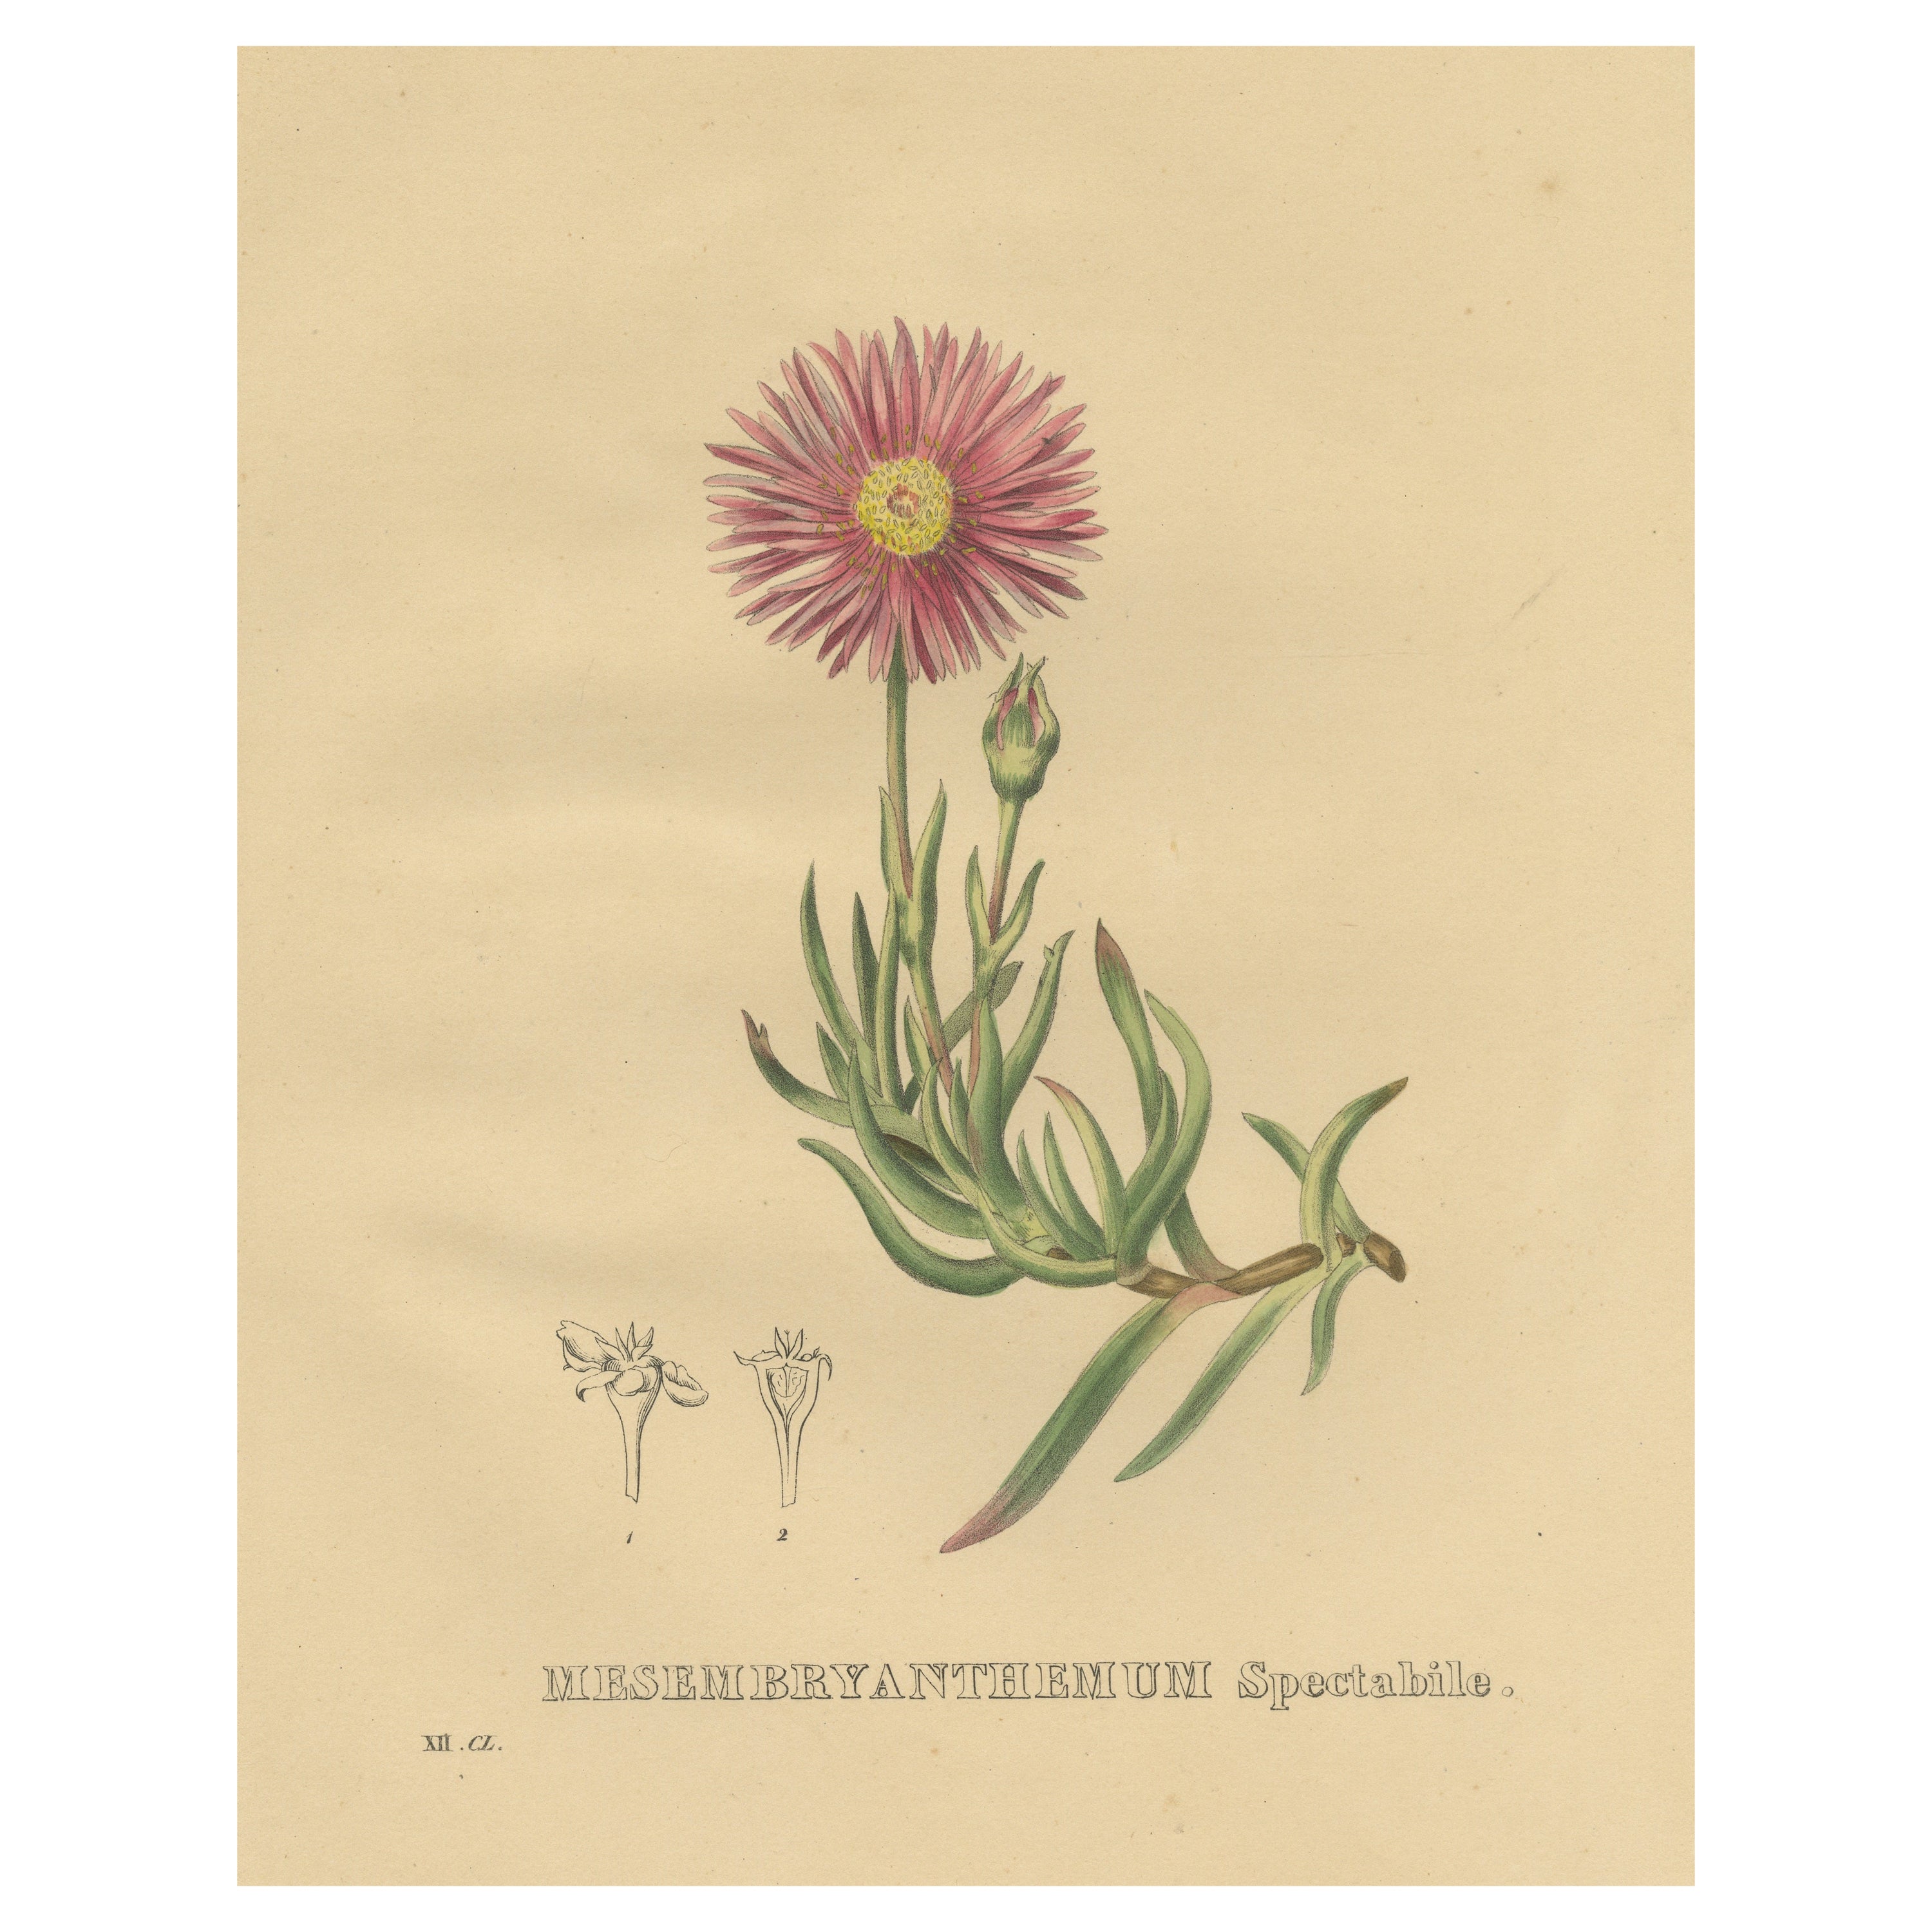 Antique Botanical Print of the Lampranthus Spectabilis or Trailing Iceplant